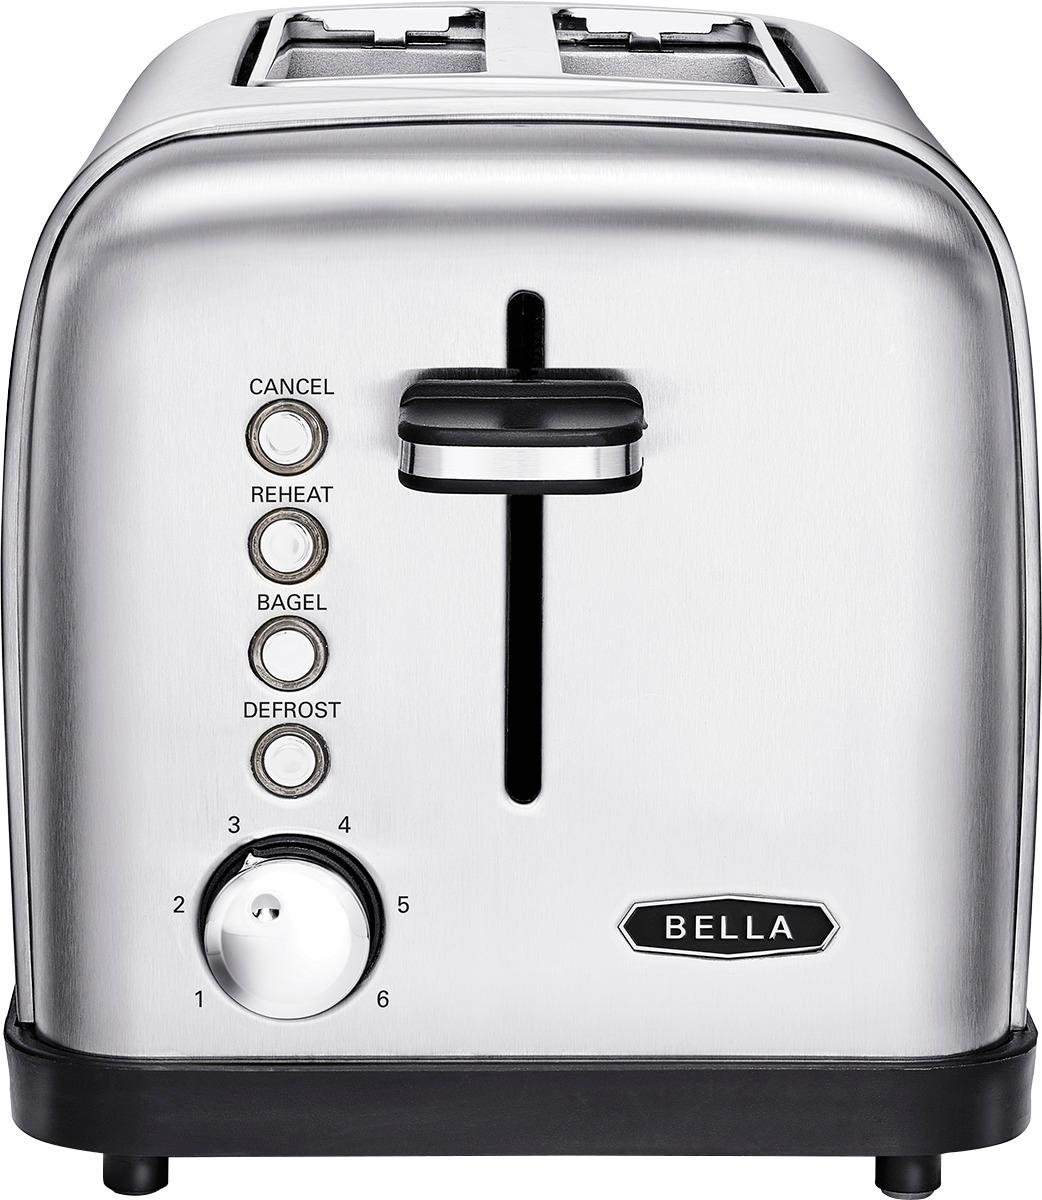 Bella - Classics 2-Slice Wide-Slot Toaster - Stainless Steel, $14.99, free pickup, Best Buy